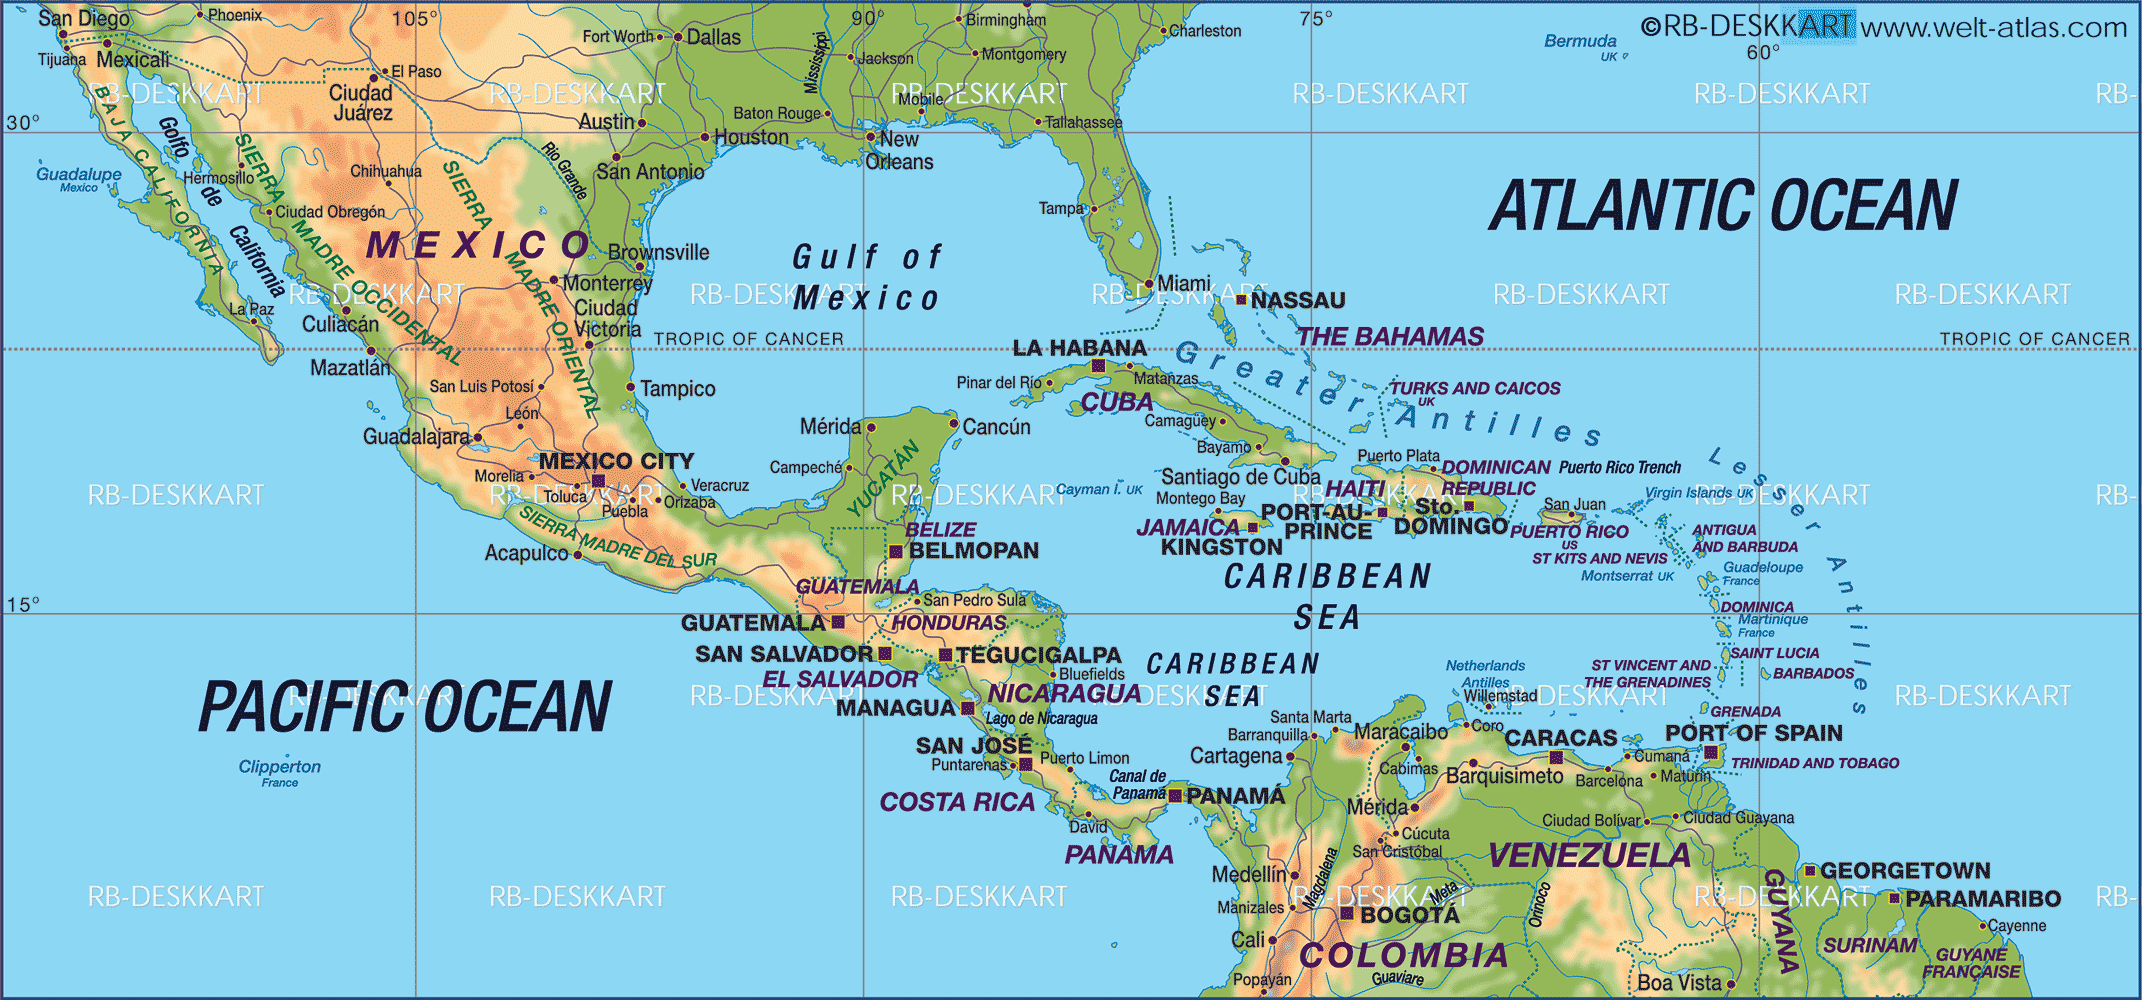 cayman islands map